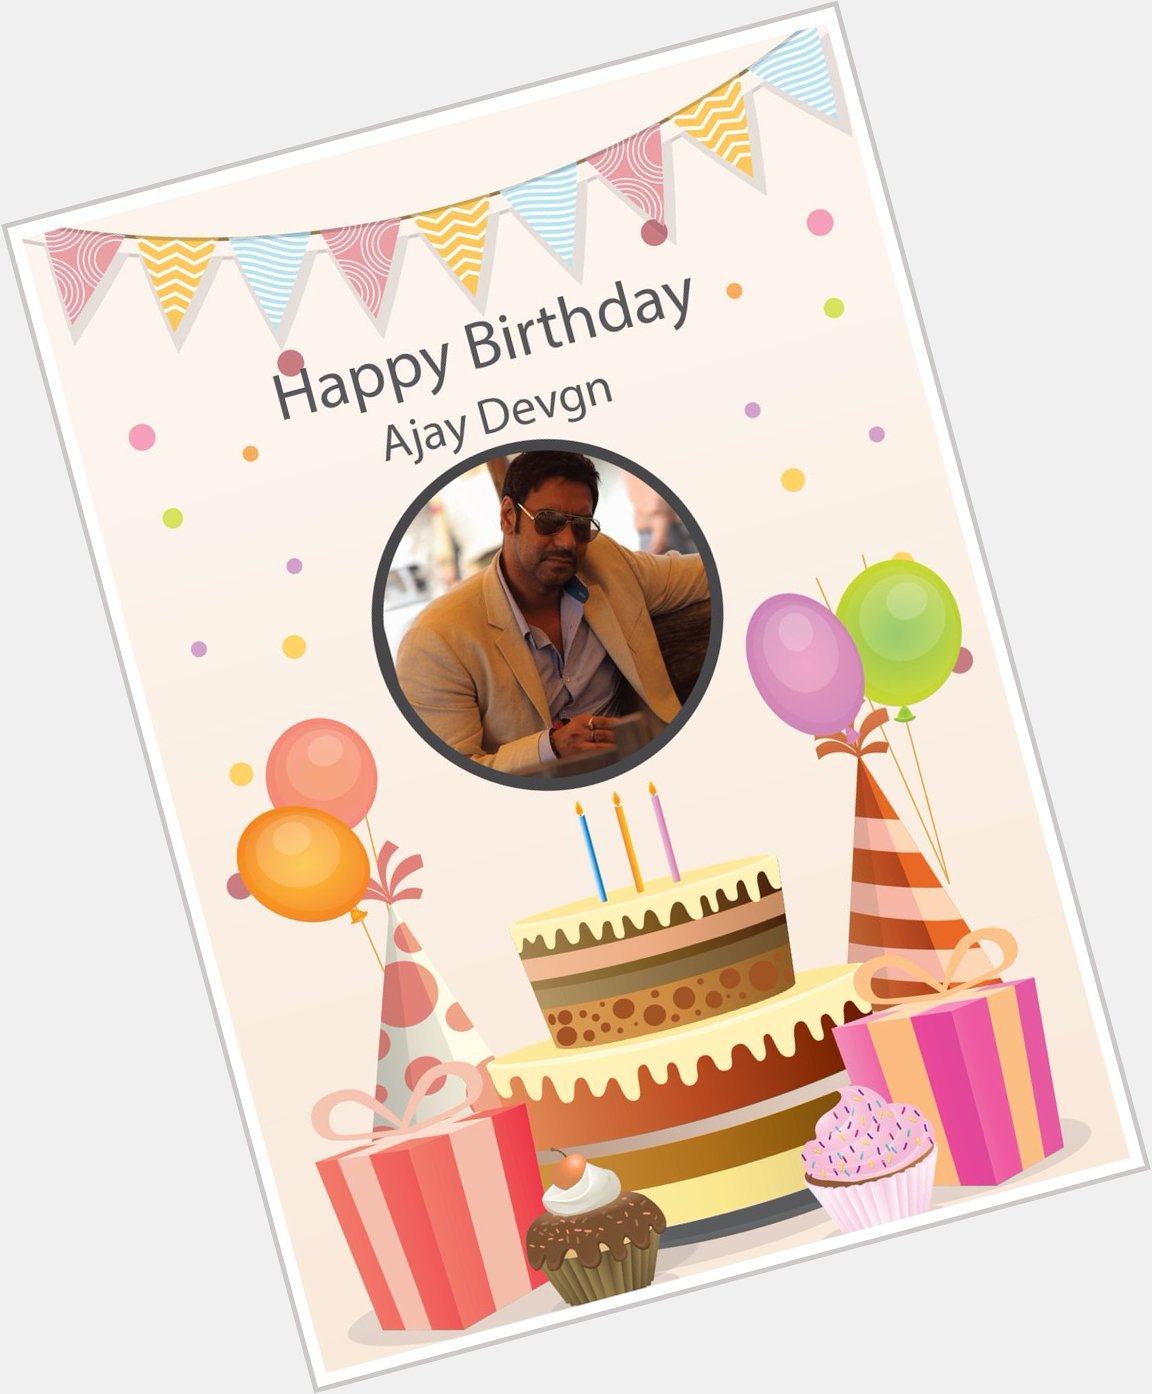   happy birthday to Ajay Devgan 